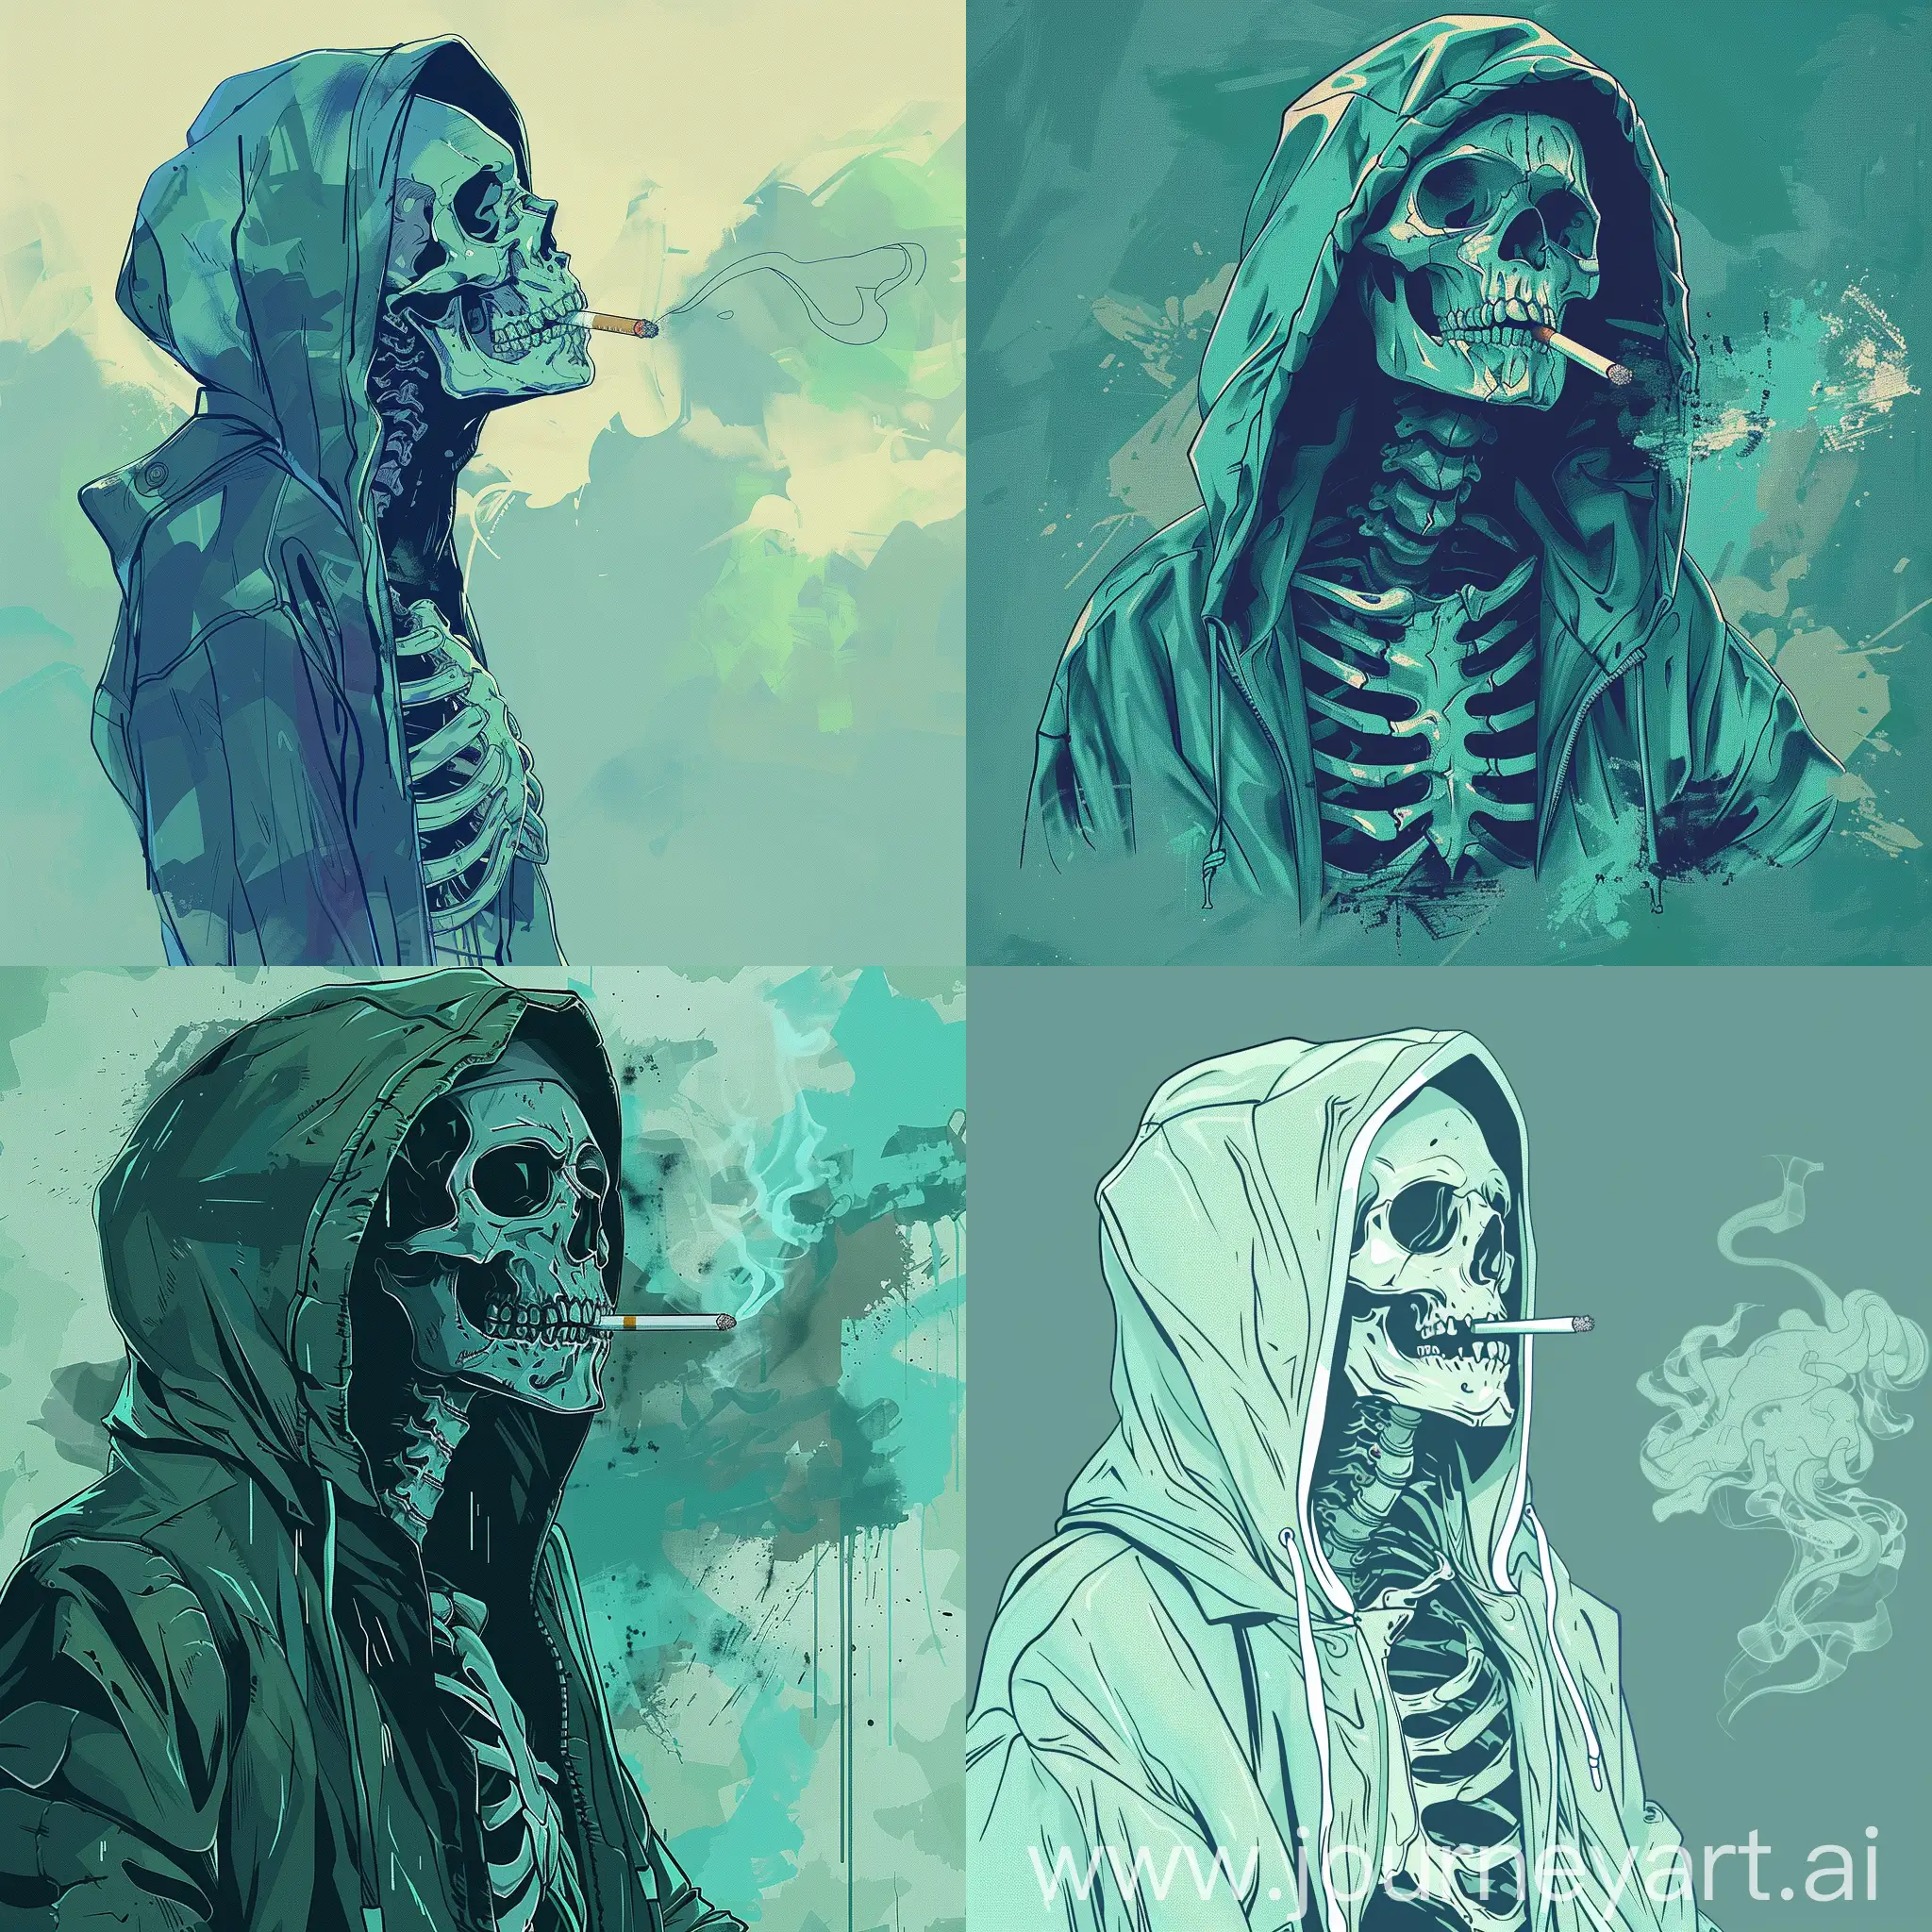 Anime style skeleton with hood jacket, cigarette, art, green-blue mixed tones, illustration by Kyutae Lee